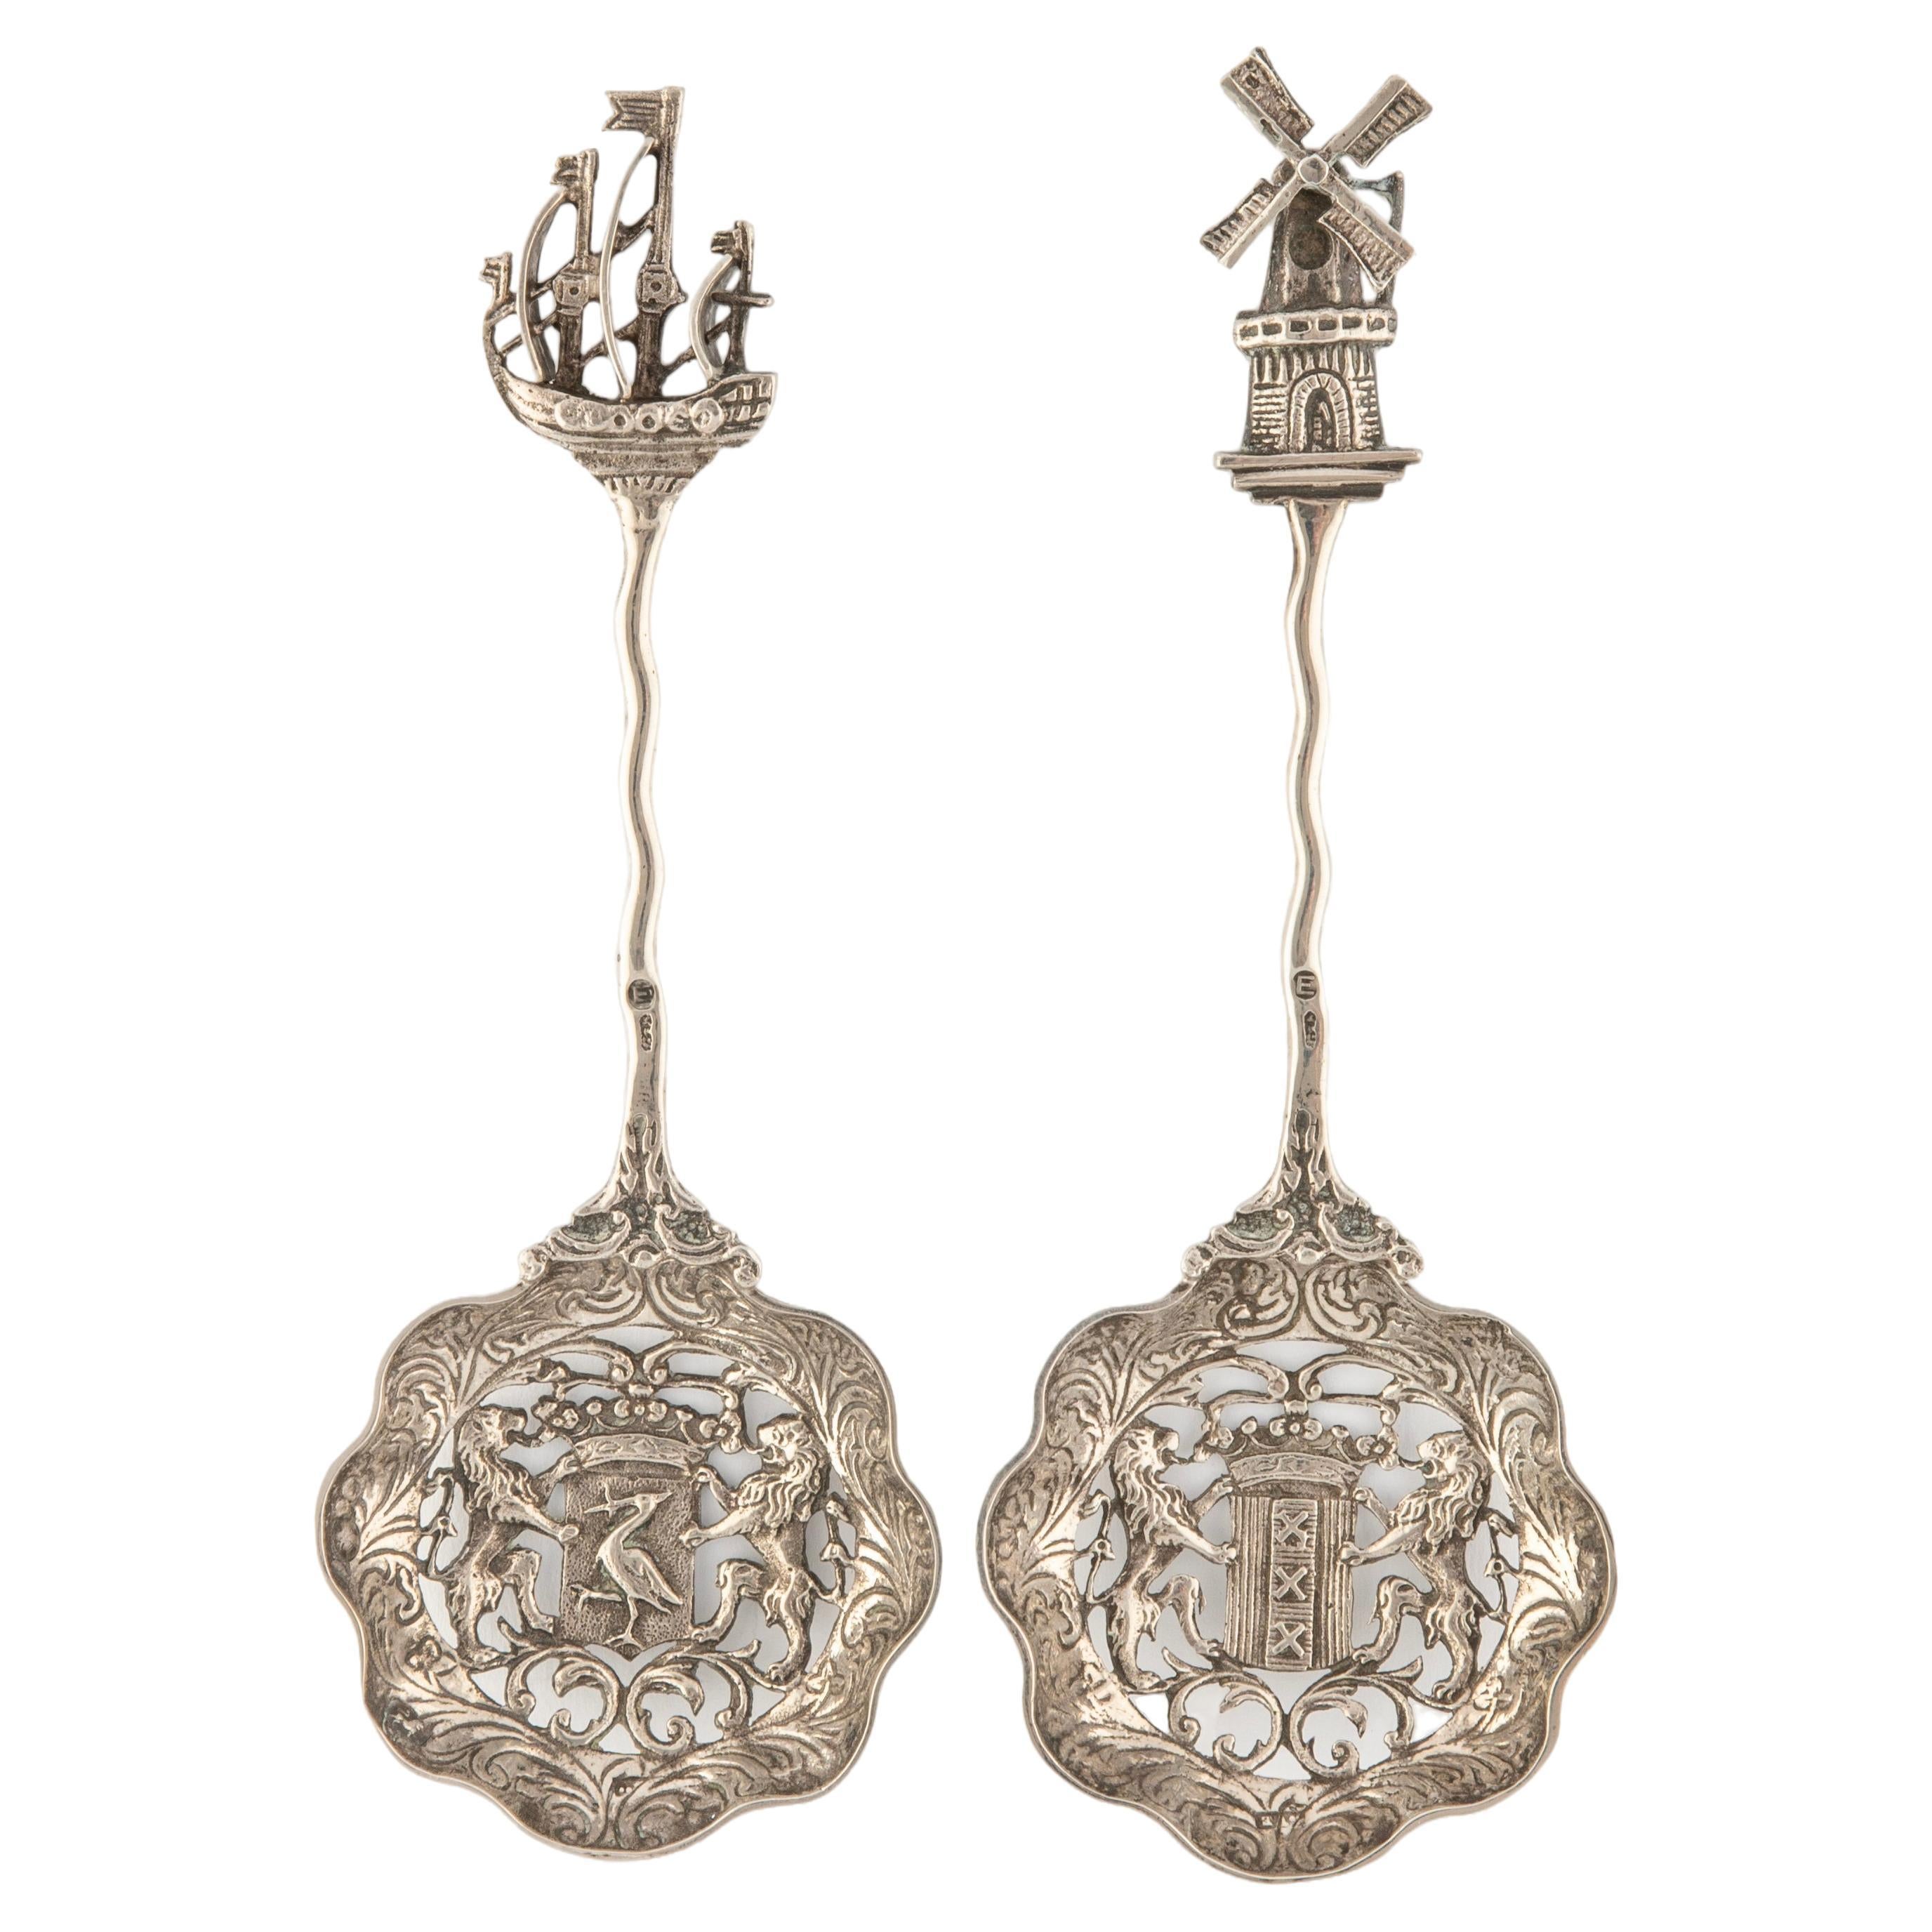 Pair of Early 20th Century Dutch Silver Souvenir Spoons